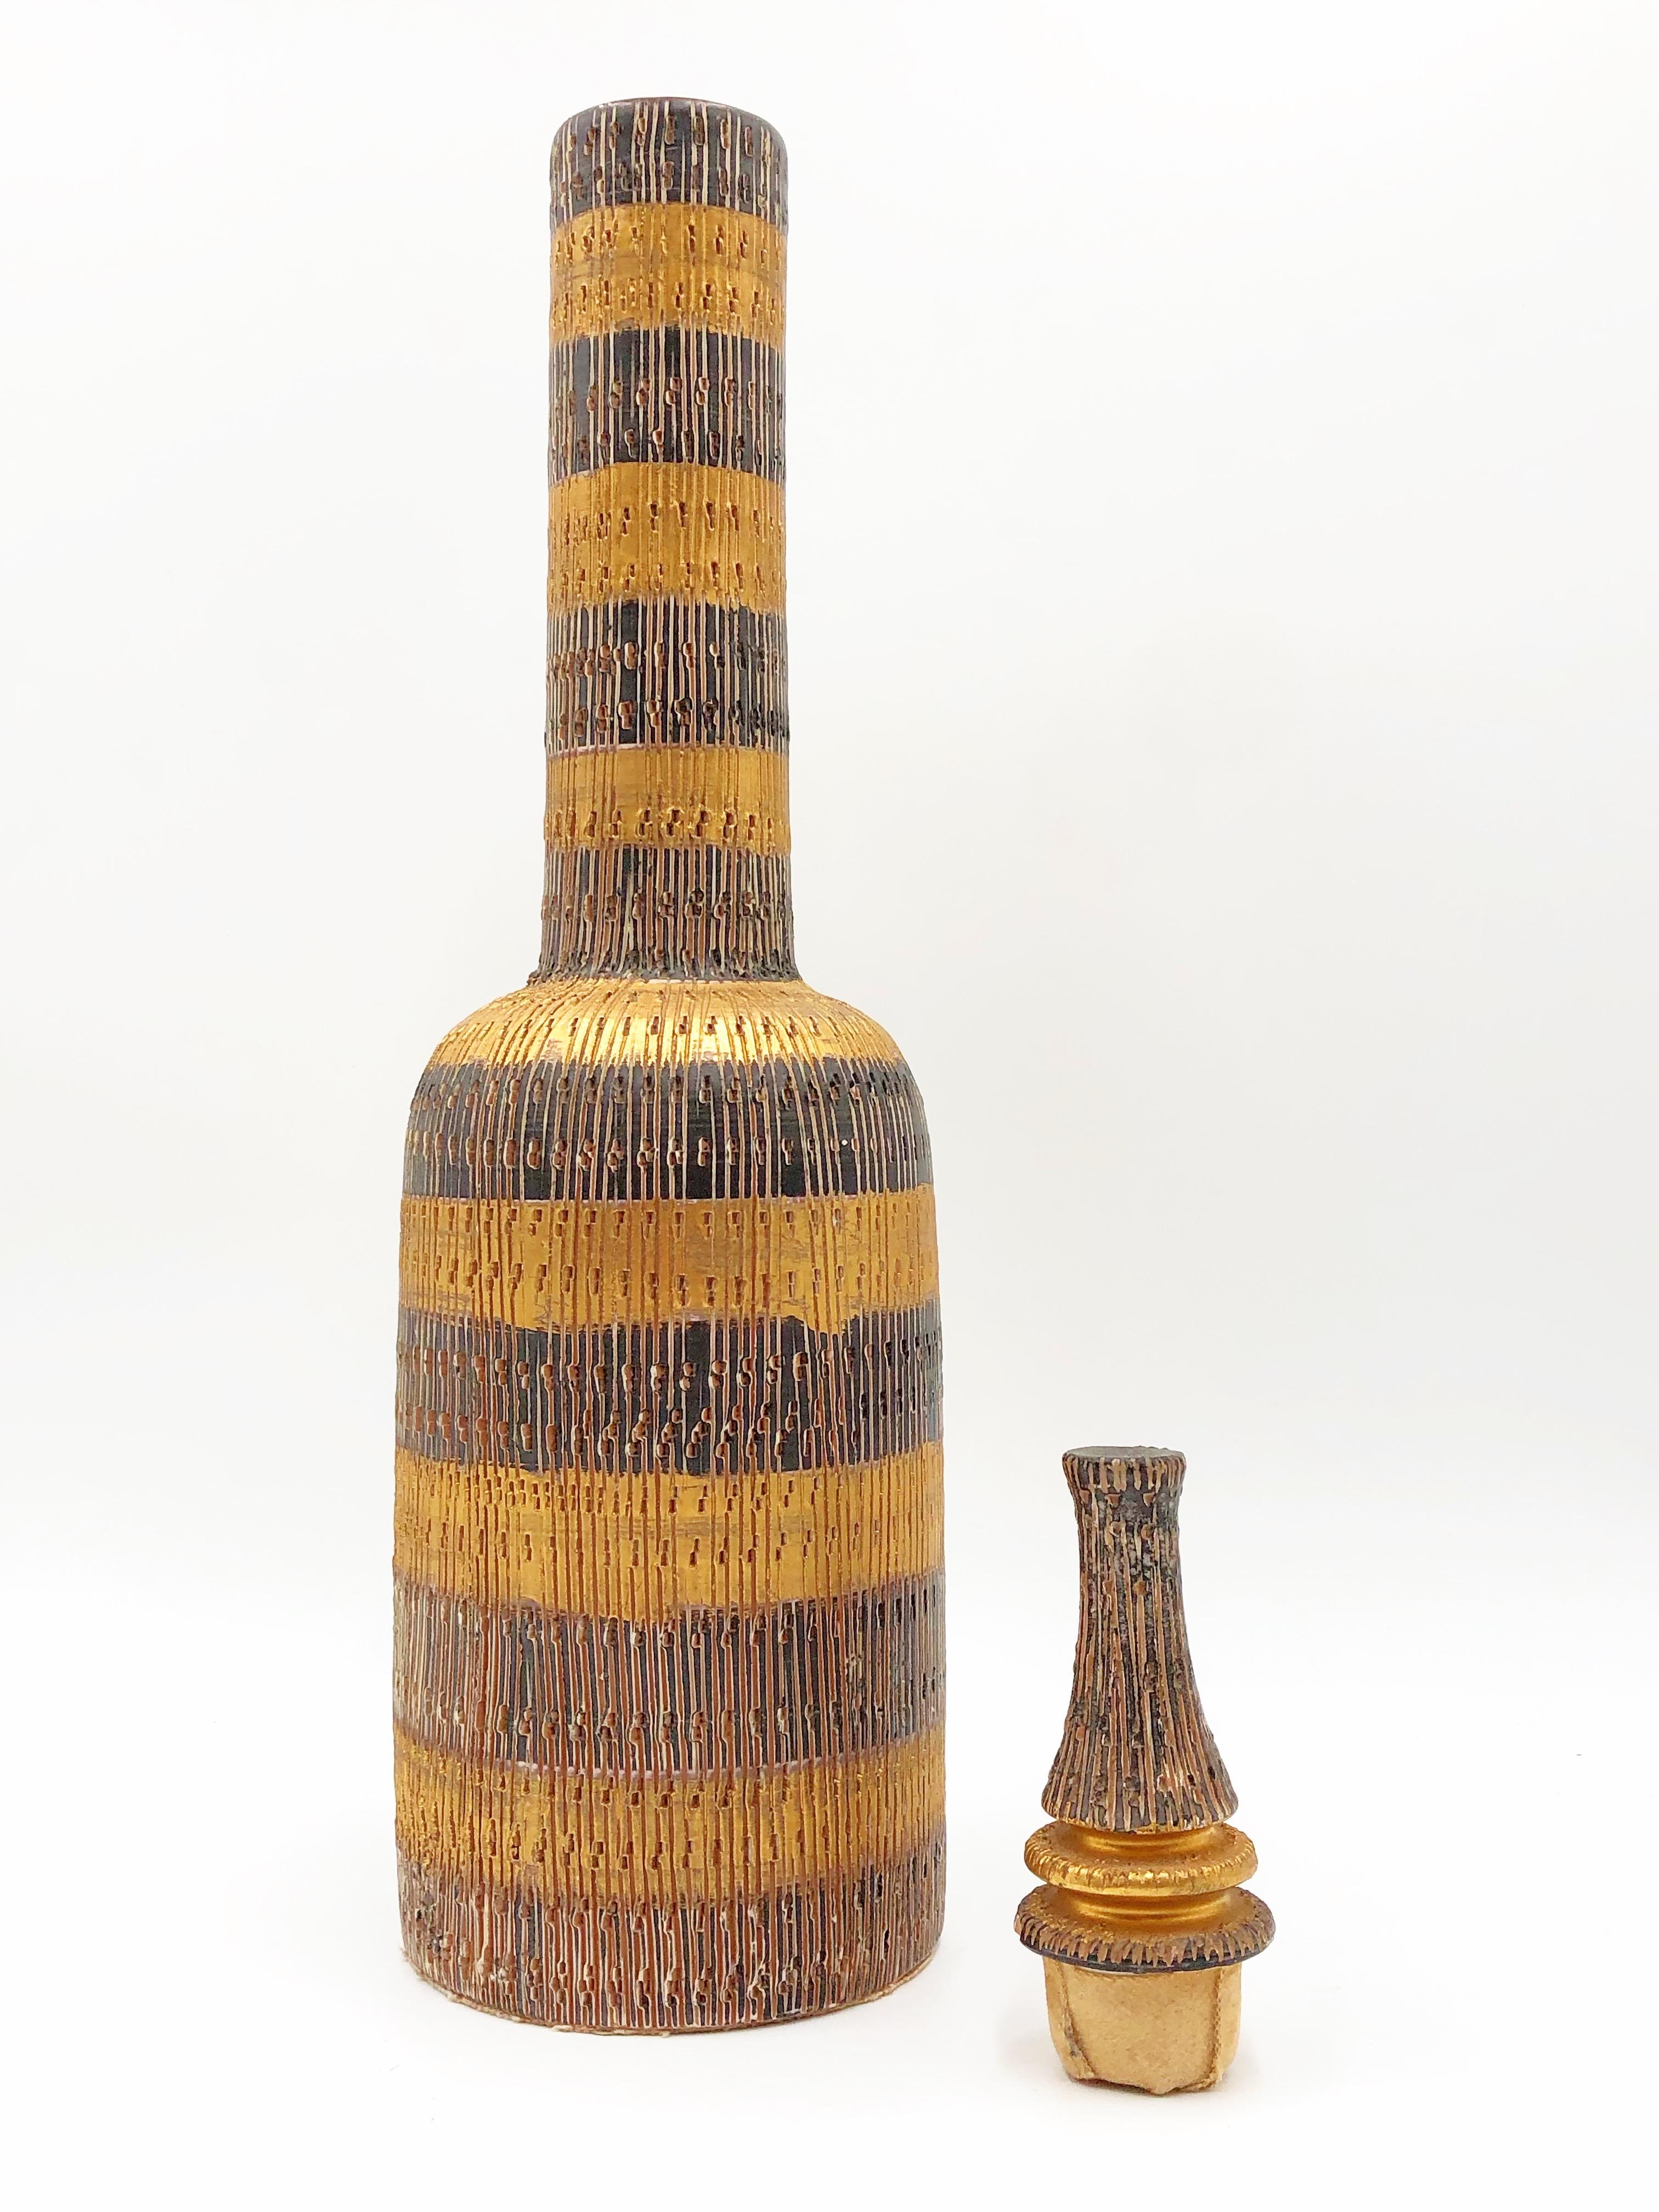 20th Century Vintage Decorative Bitossi Seta Ceramic Lidded Bottle Vessel, Made in Italy For Sale